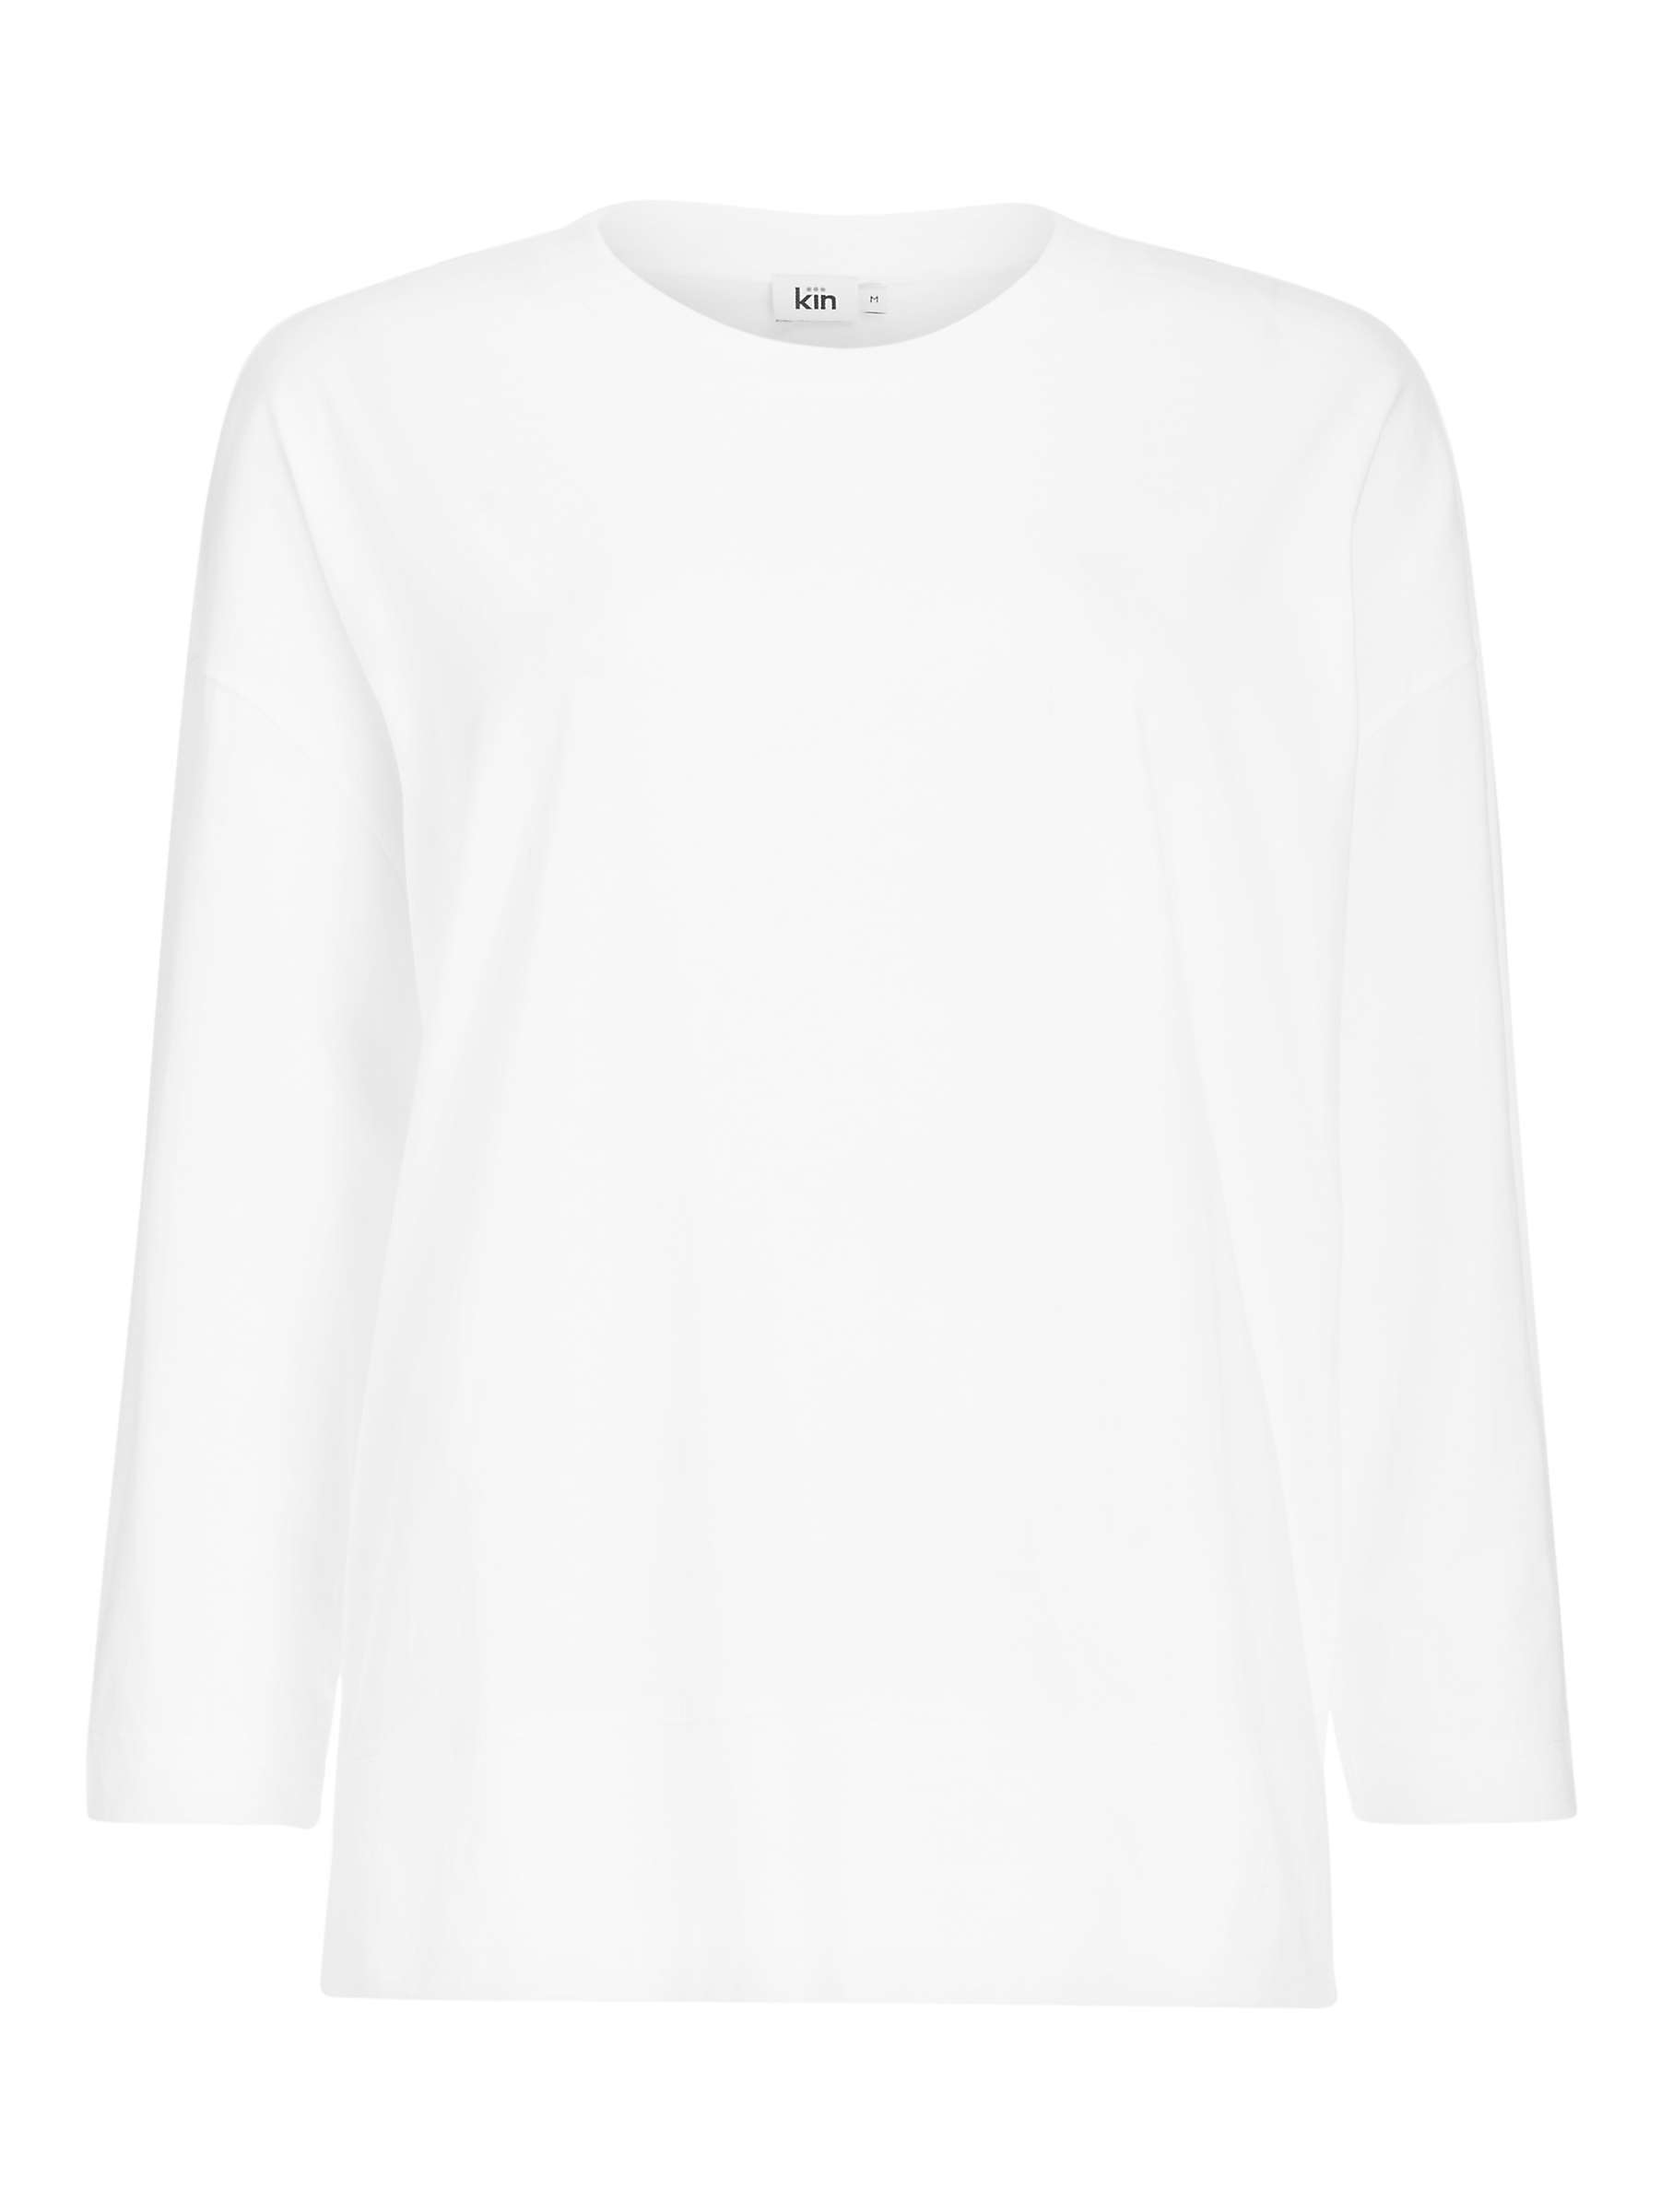 Buy Kin 3/4 Sleeve T-Shirt Online at johnlewis.com